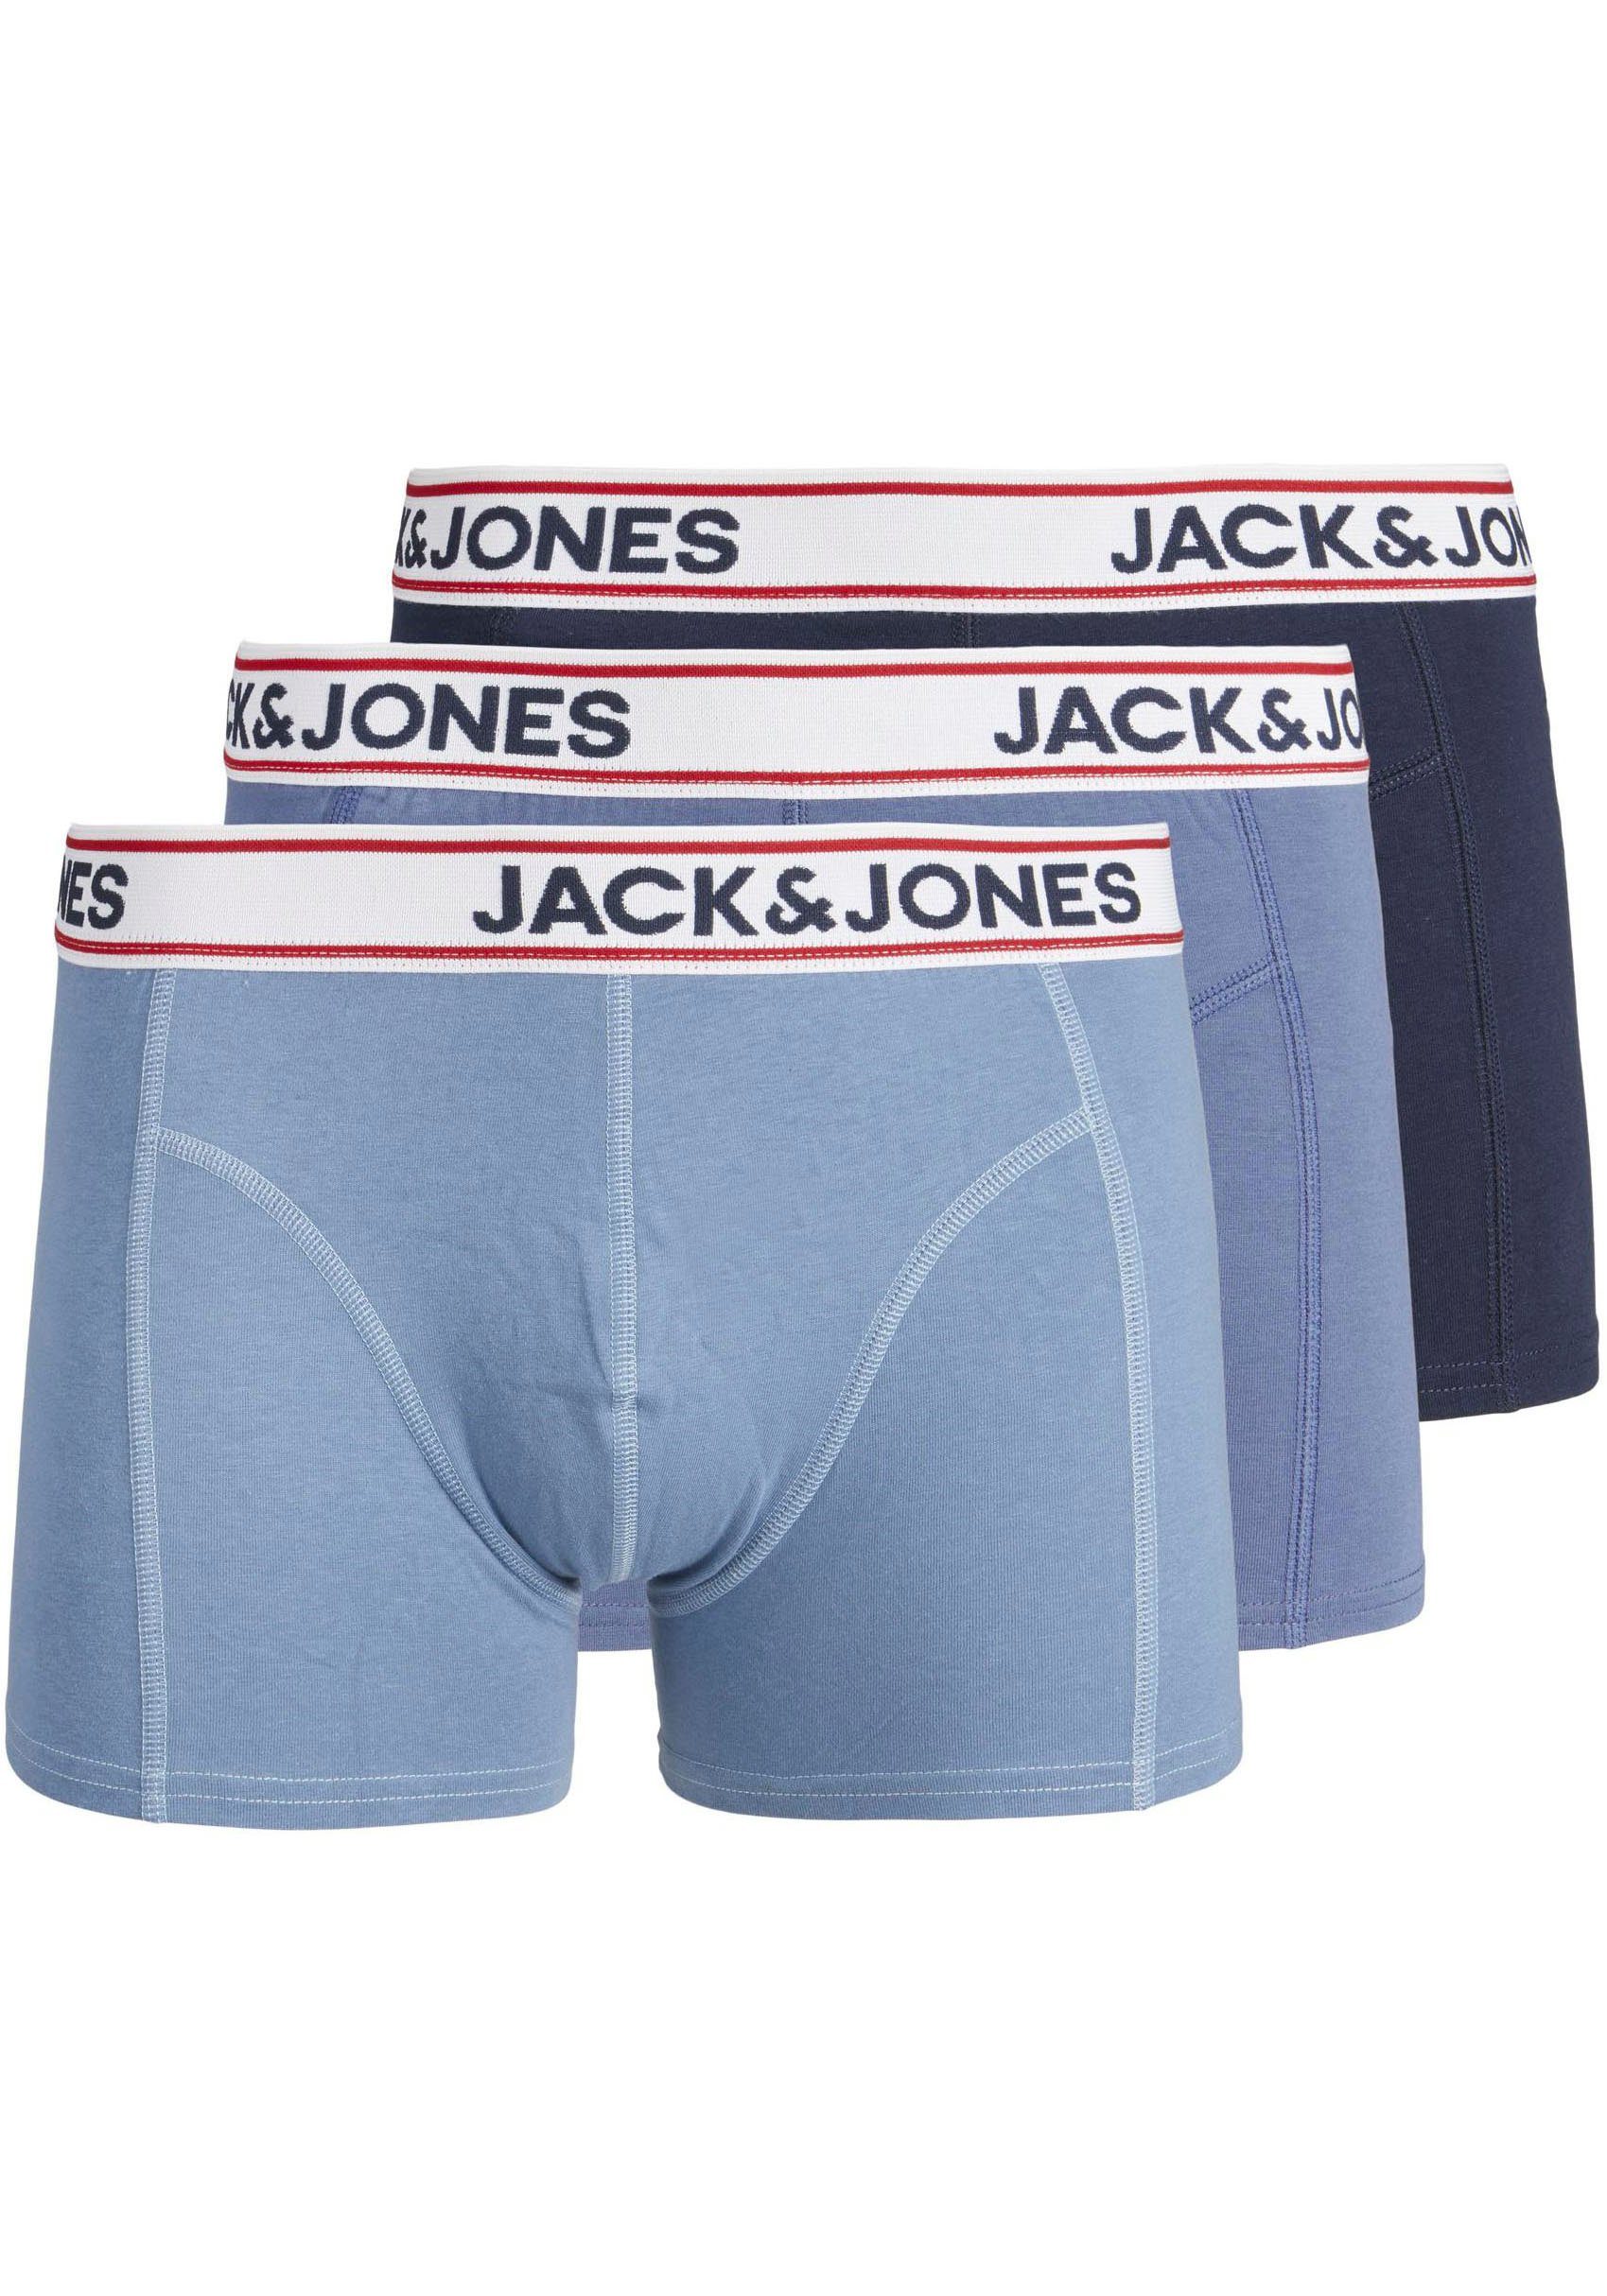 Trunk TRUNKS coronet & 3-St) PACK / blazer Jack Jones NOOS 3 JACJAKE navy (Packung,